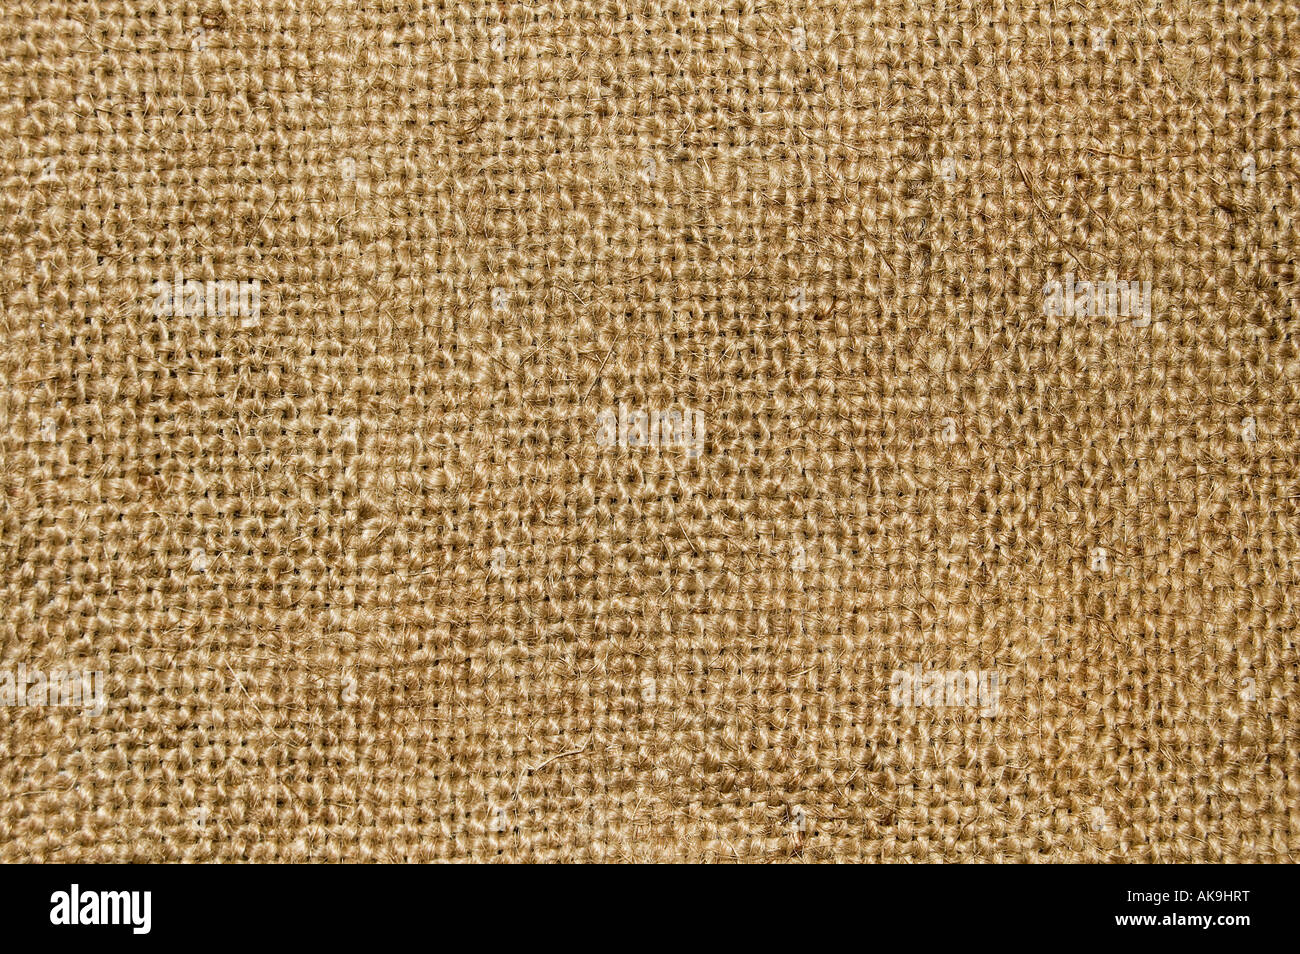 Texture of sacks Stock Photo